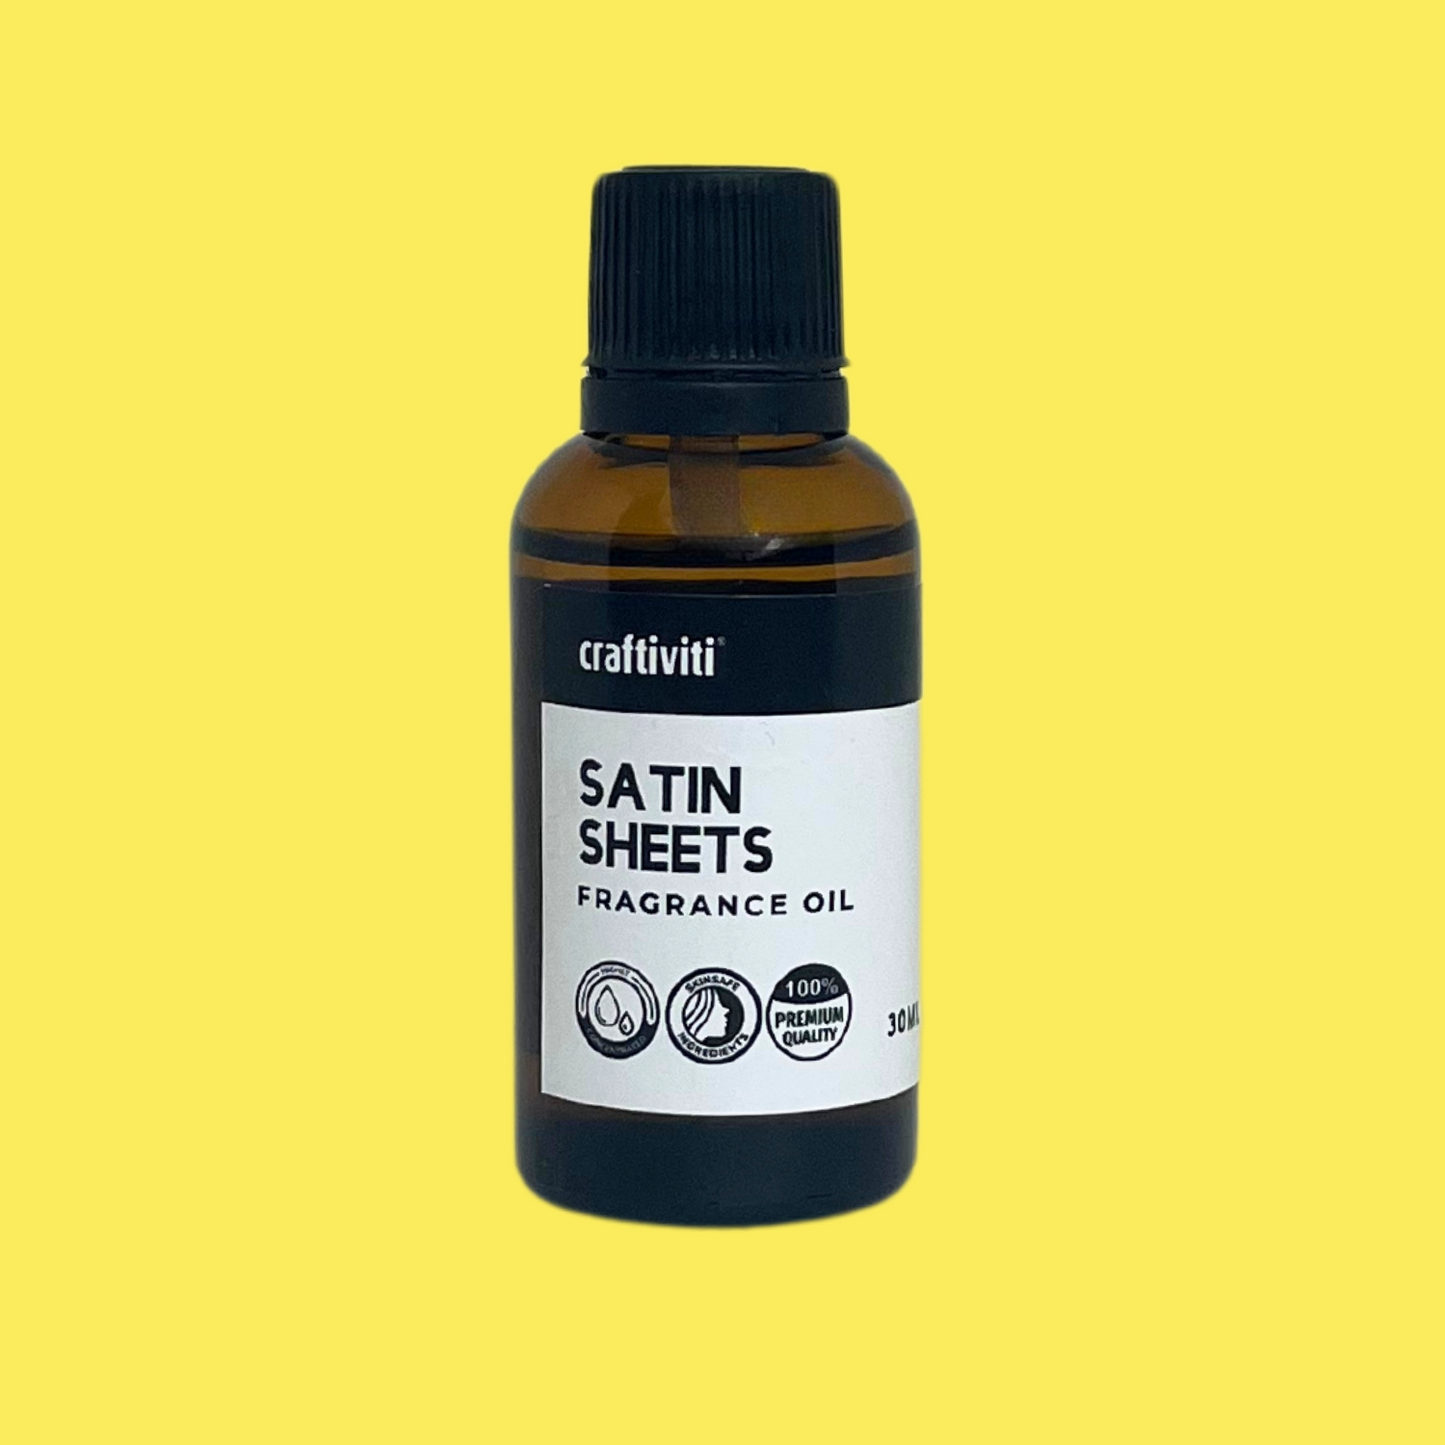 Satin Sheets Fragrance Oil